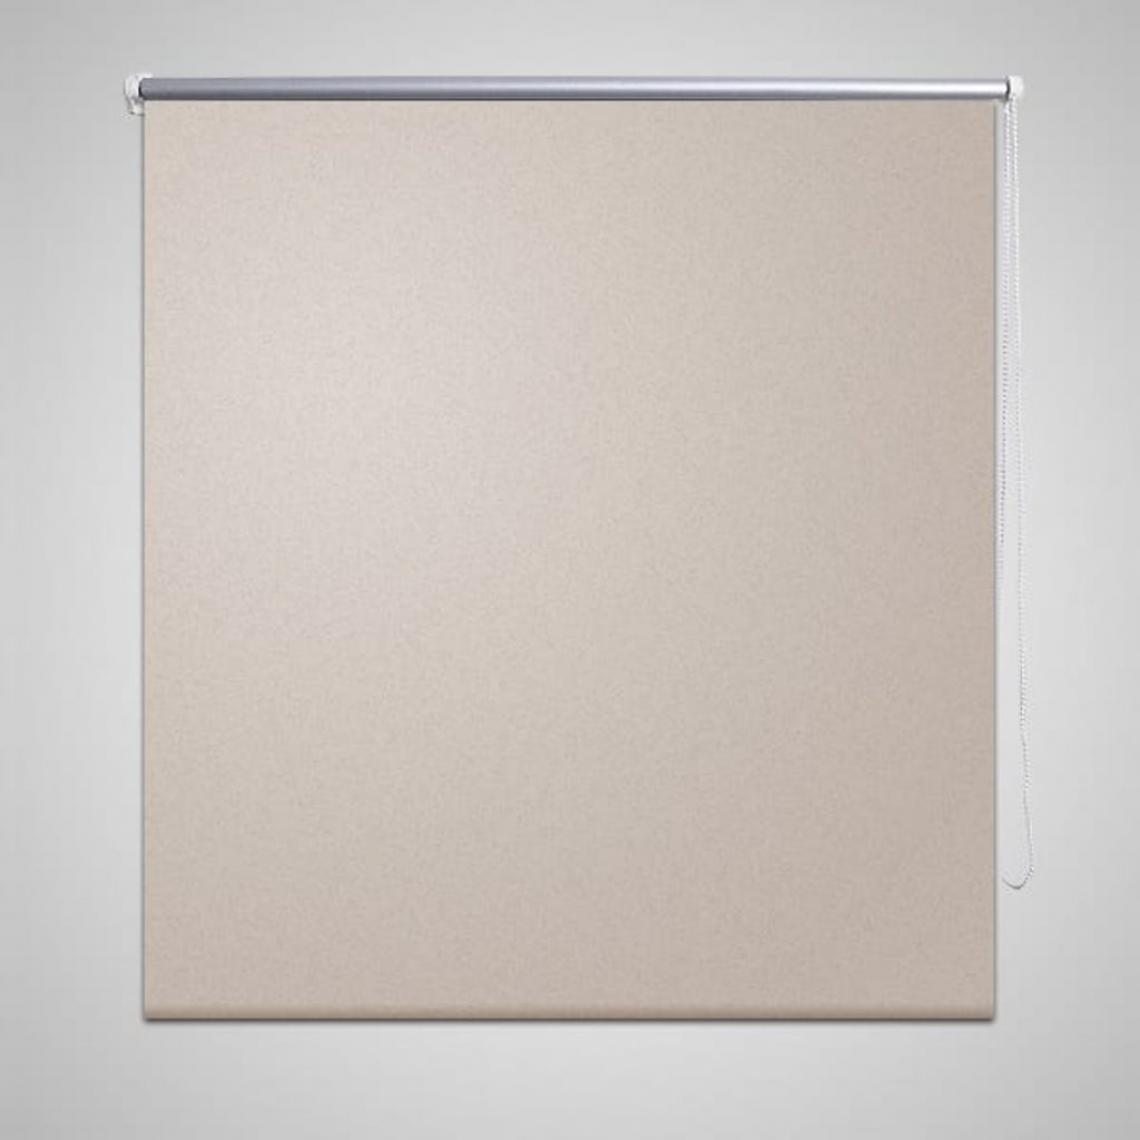 Hucoco - Store enrouleur occultant beige 60 x 120 cm - Beige - Store compatible Velux